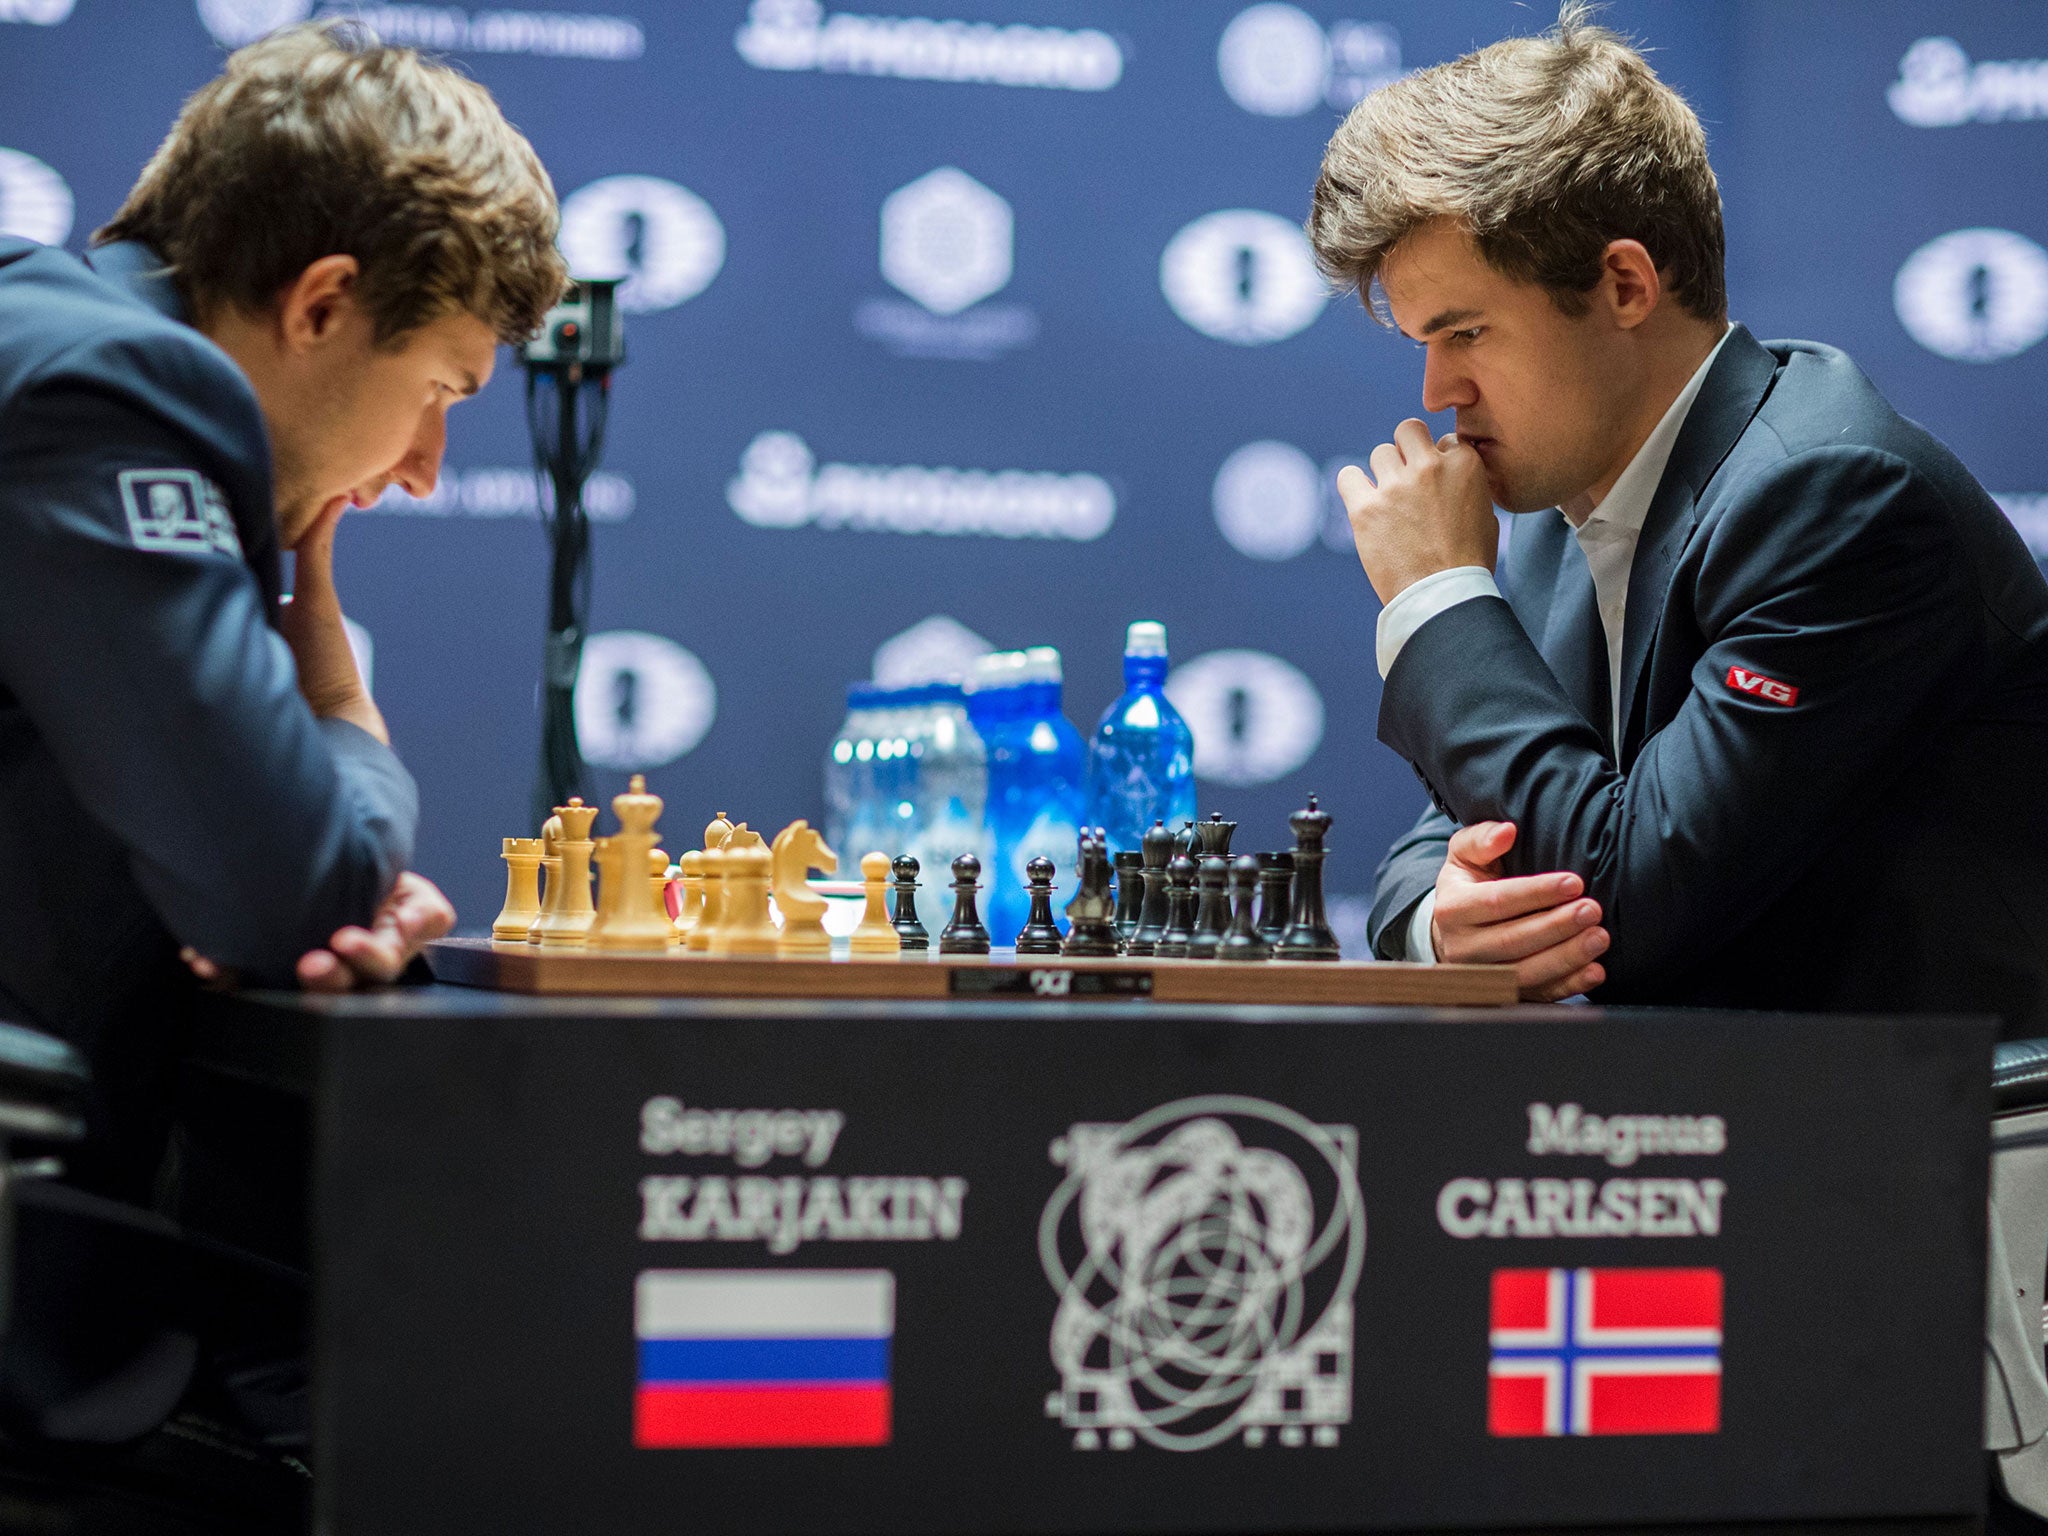 Magnus Carlsen wins game 10 vs Sergey Karjakin in World Chess championship  - Hindustan Times